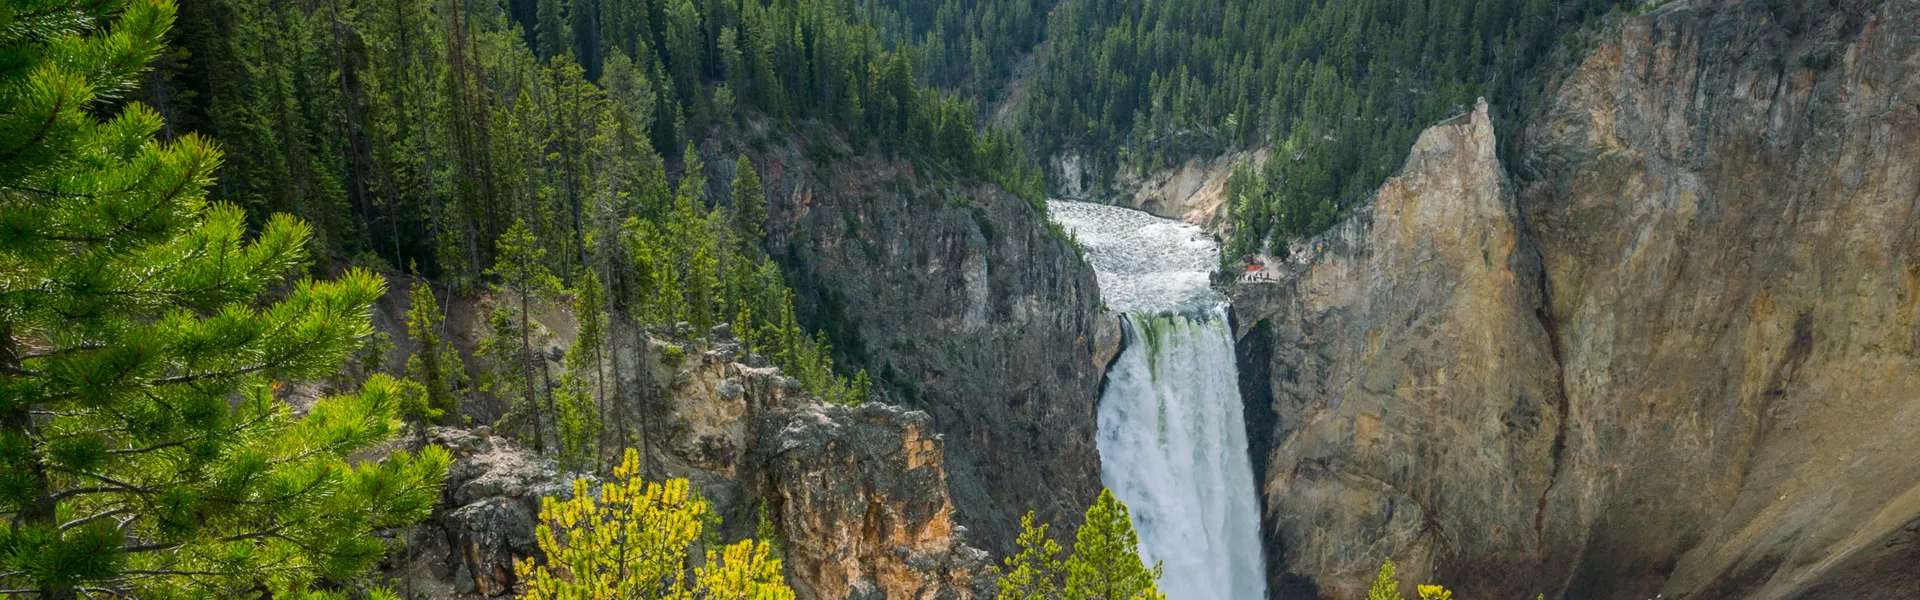 Waterfall in Yellowstone National Park, USA